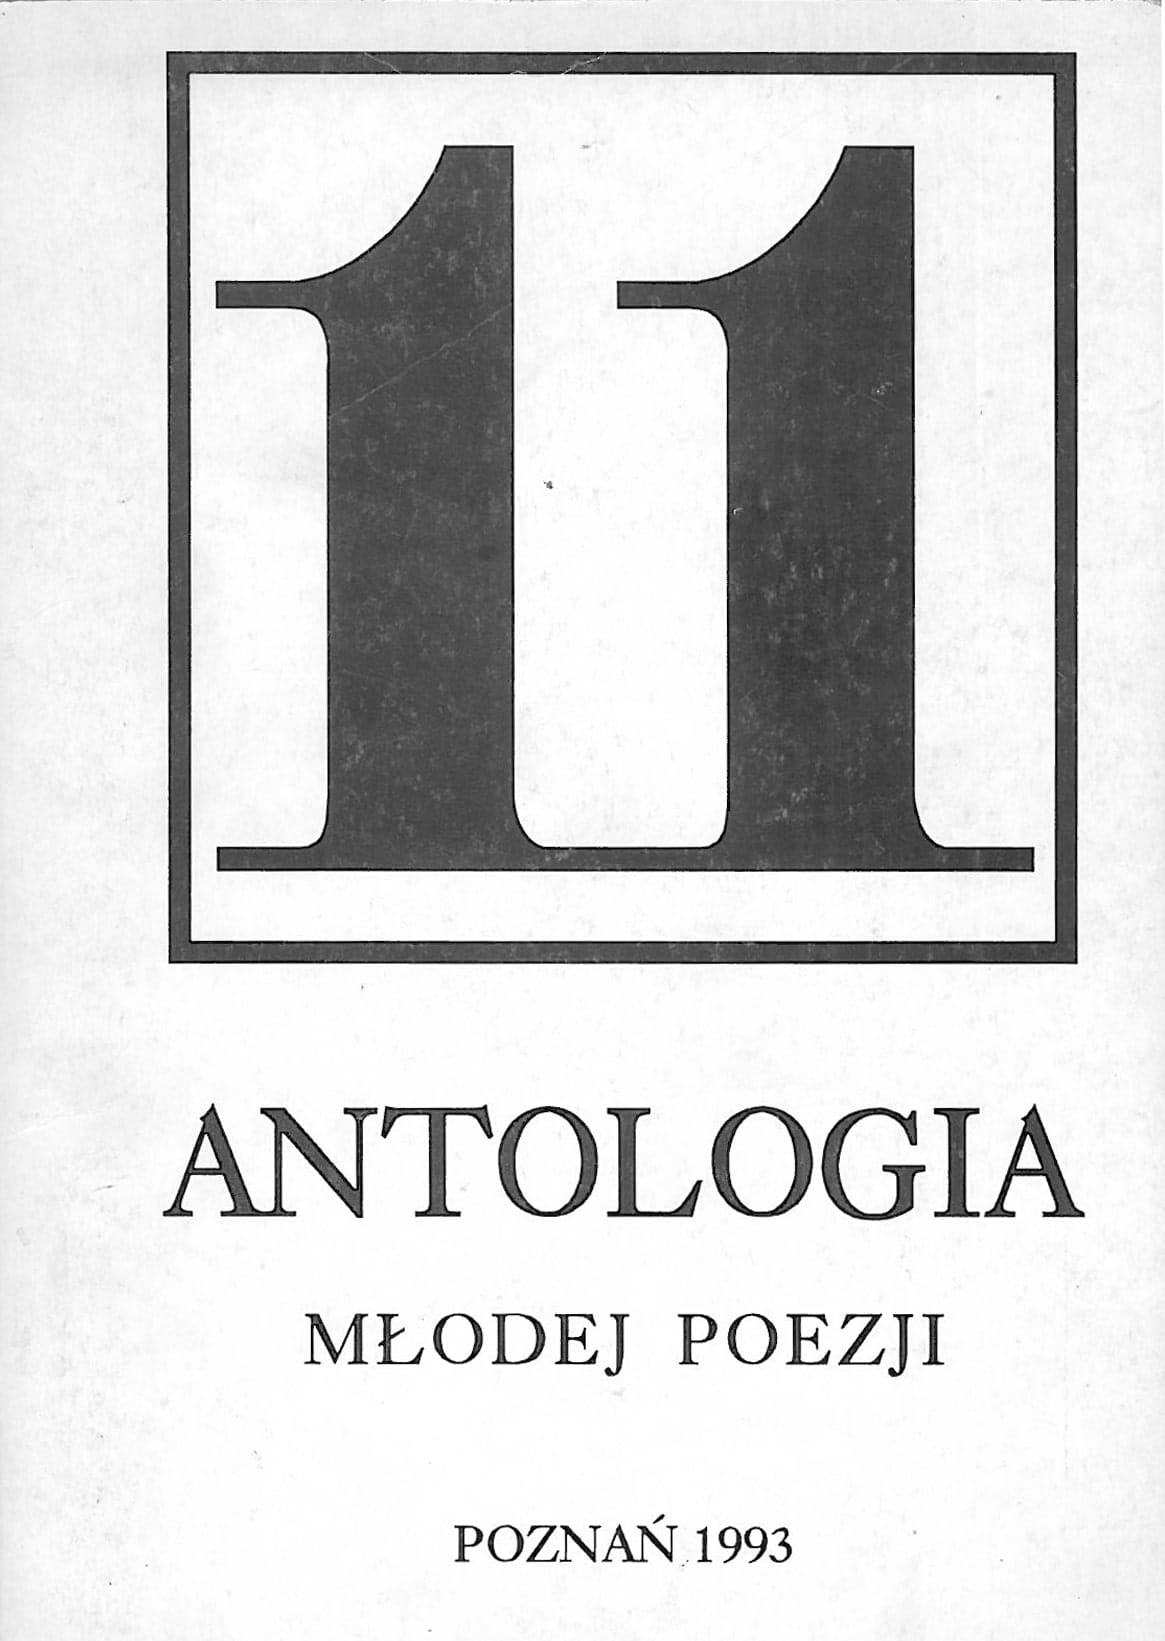 Antologia młodej poezji, 1993